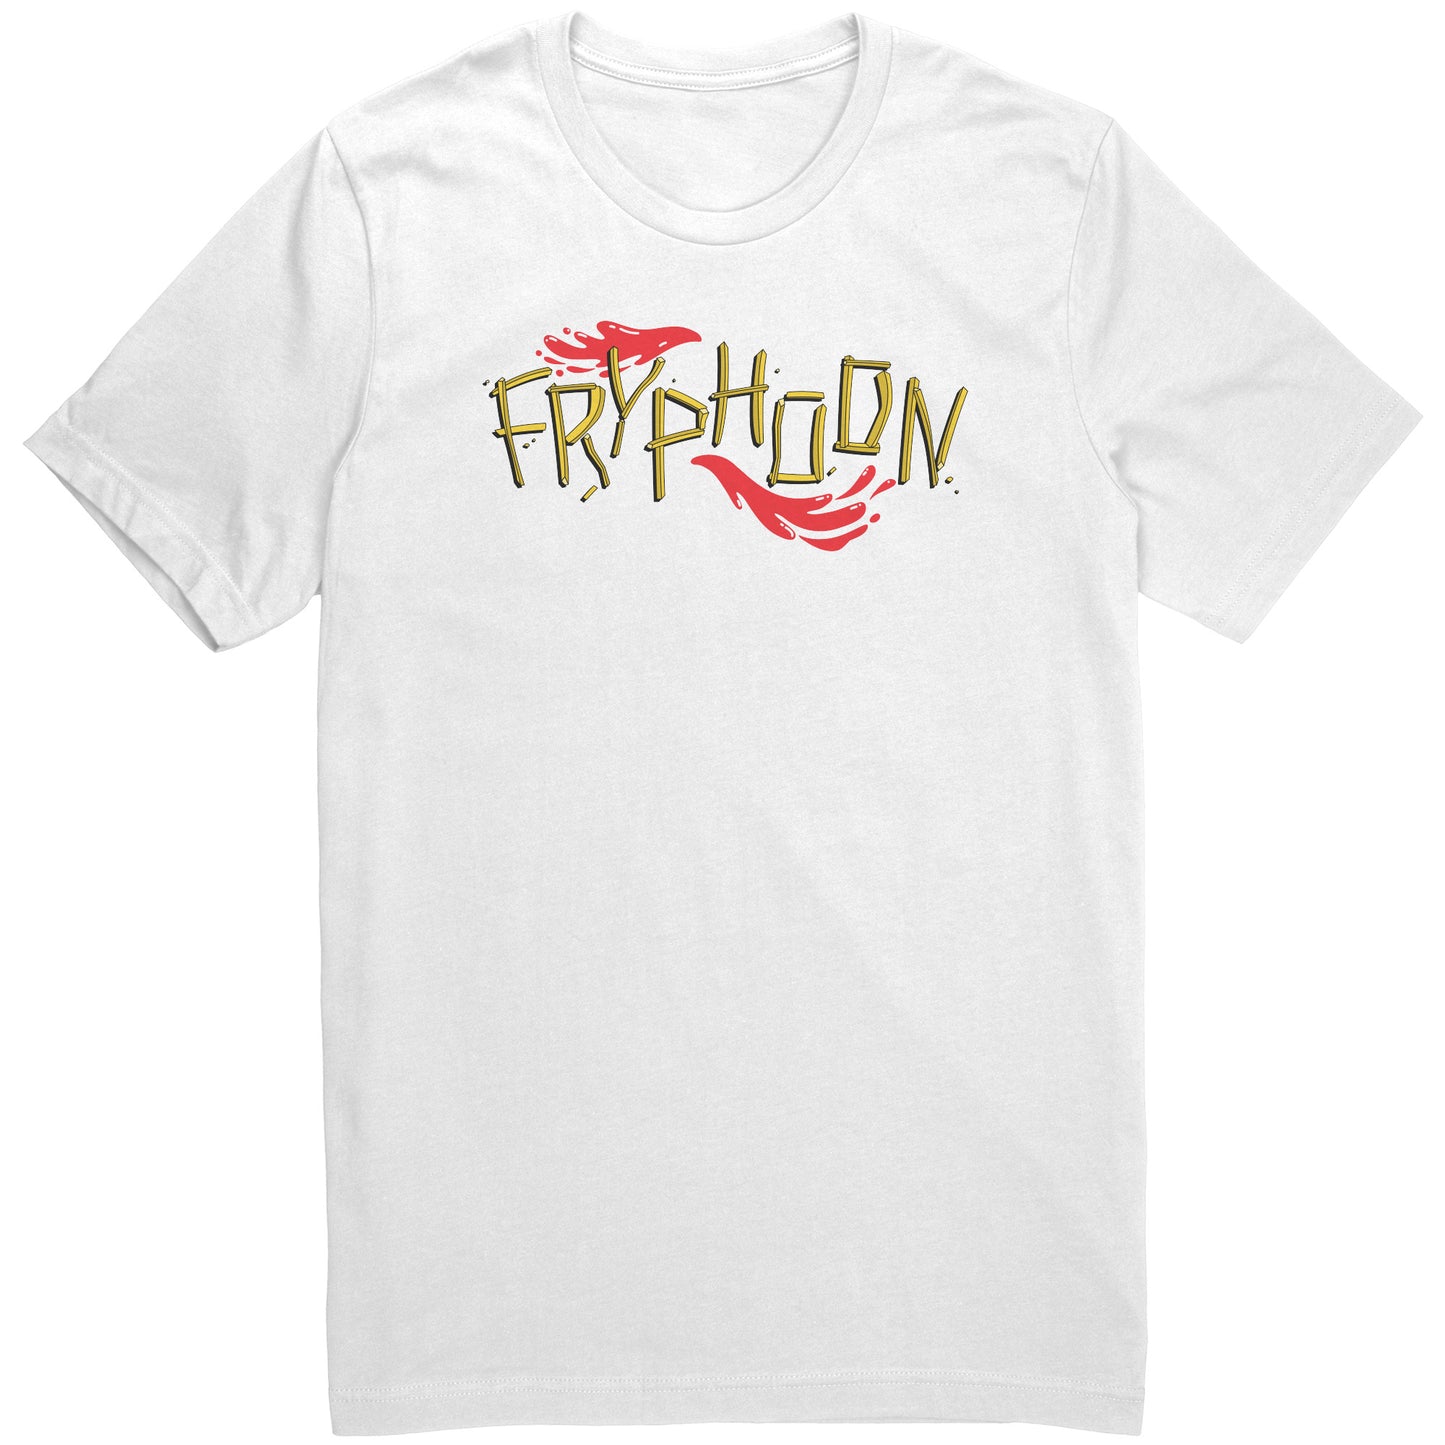 Fryphoon t-shirt